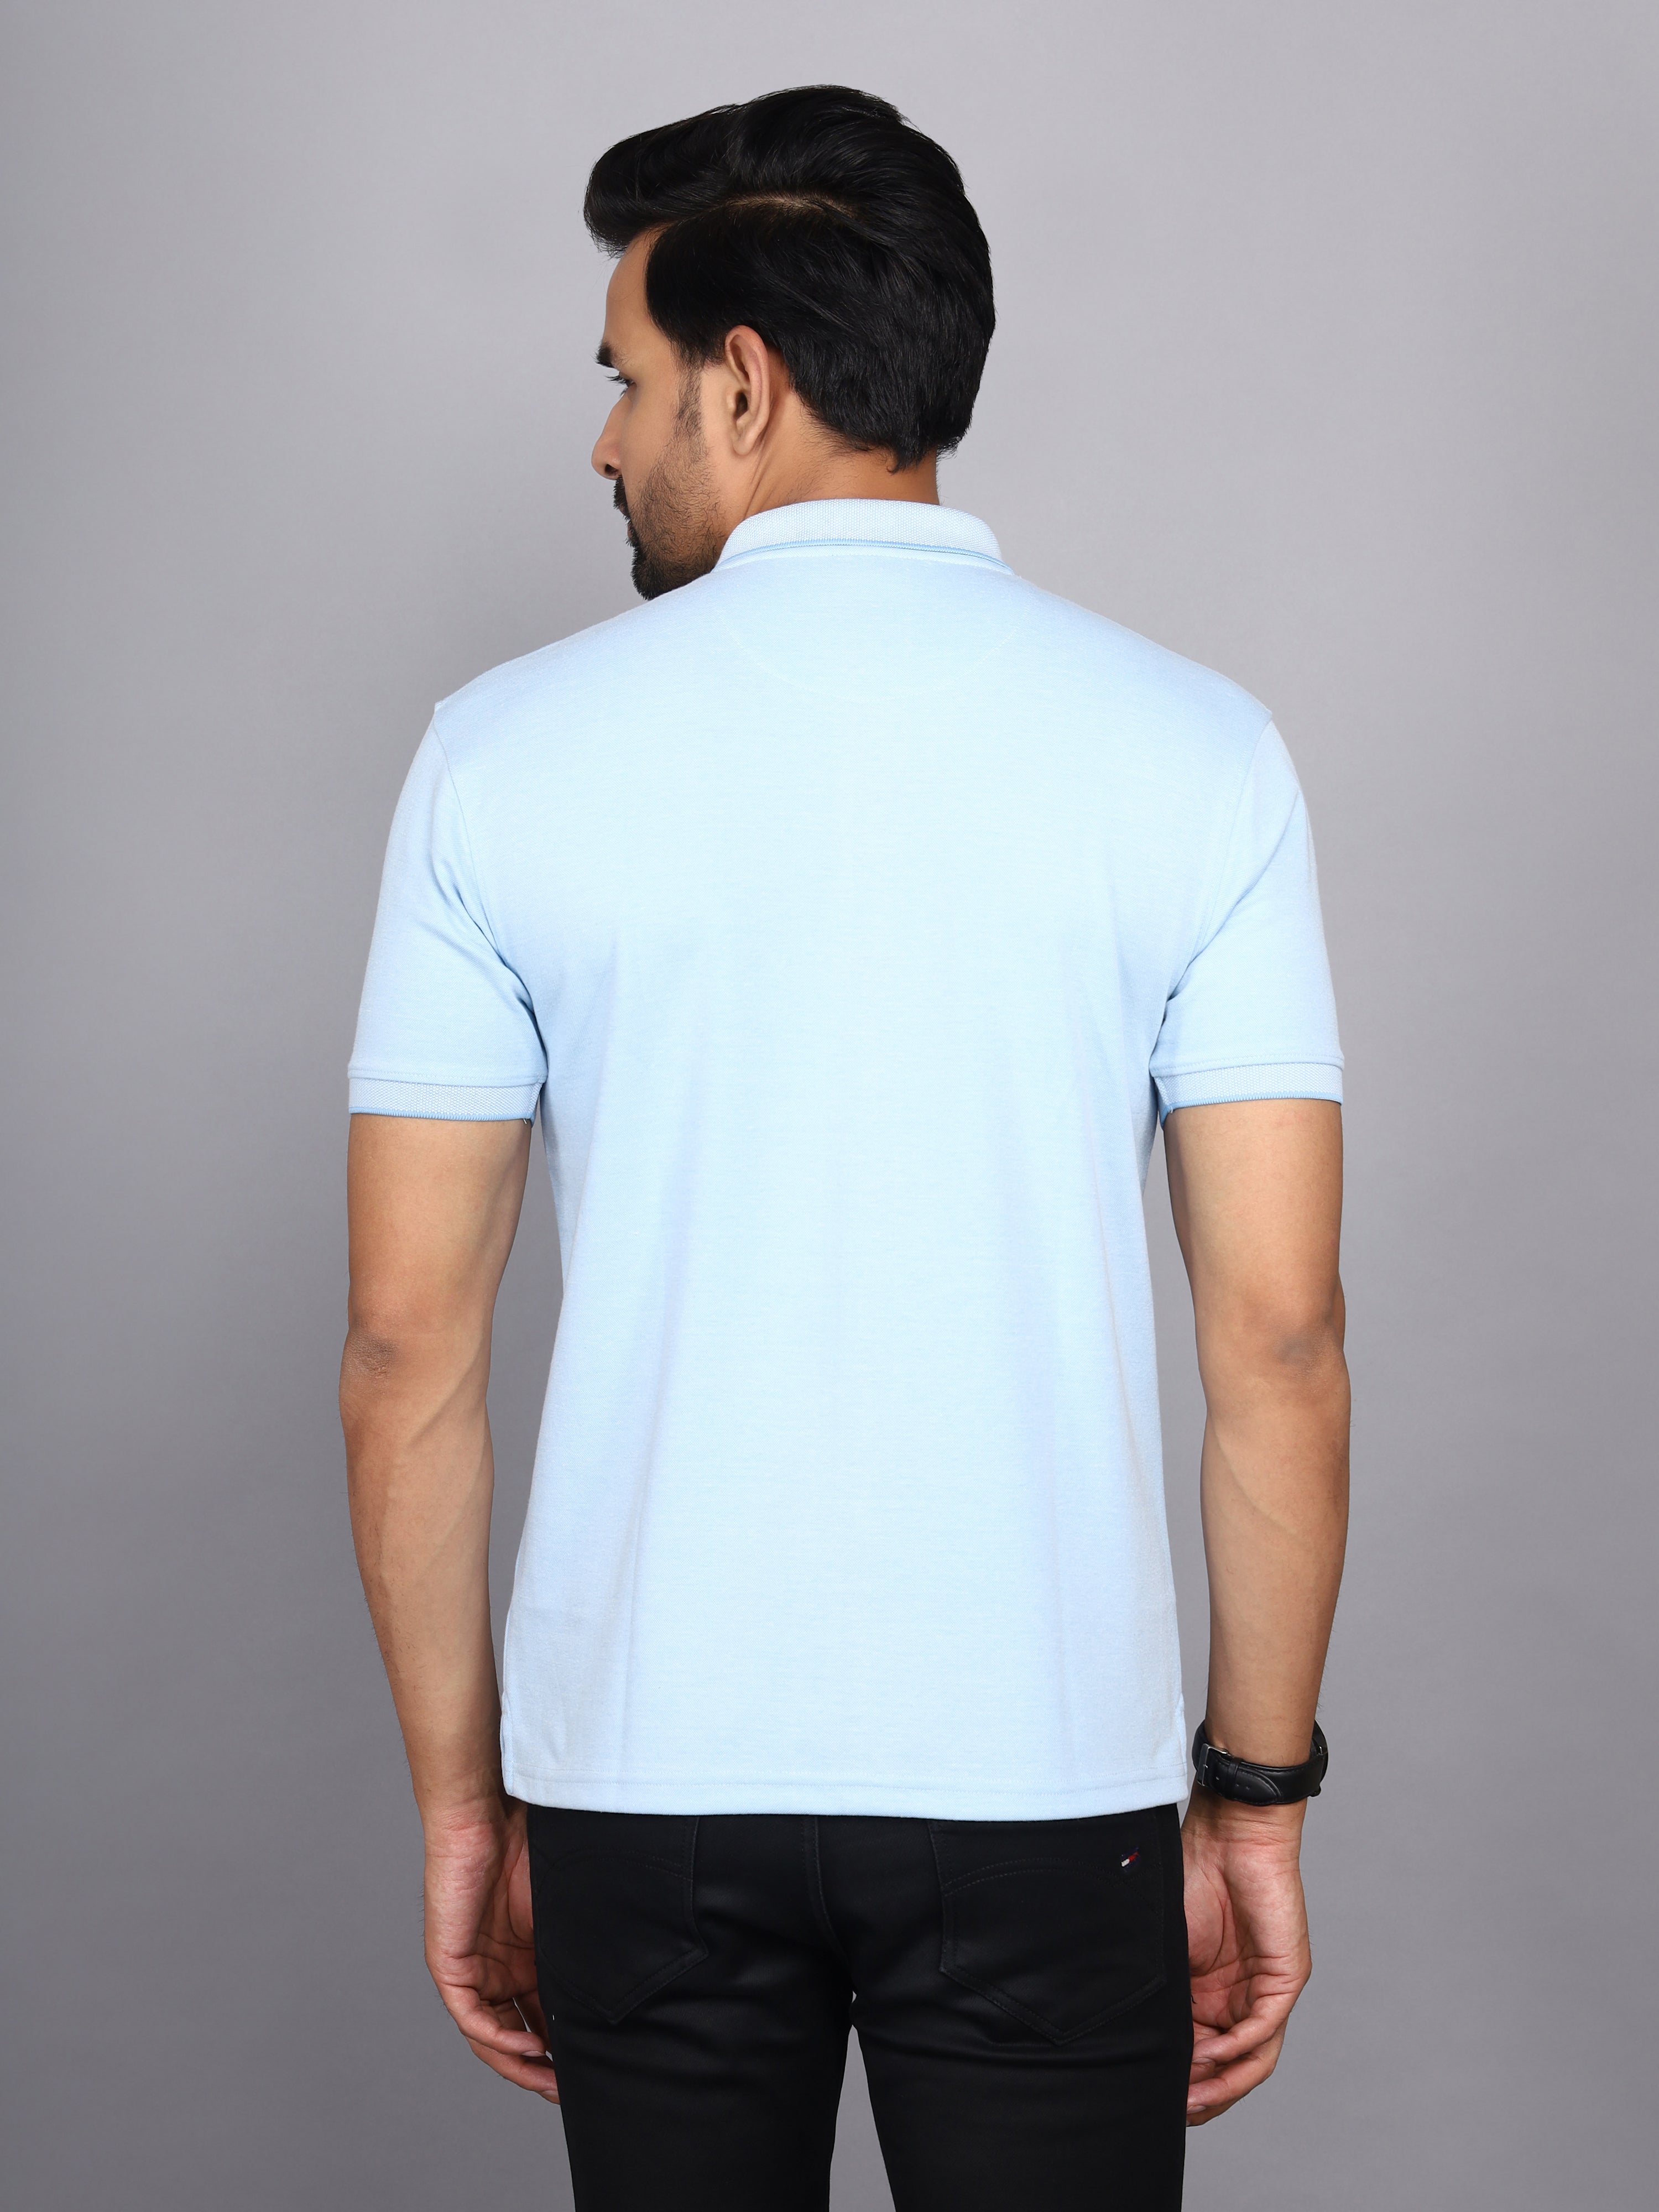 Jaguro Men's Polo T-shirt Light Blue